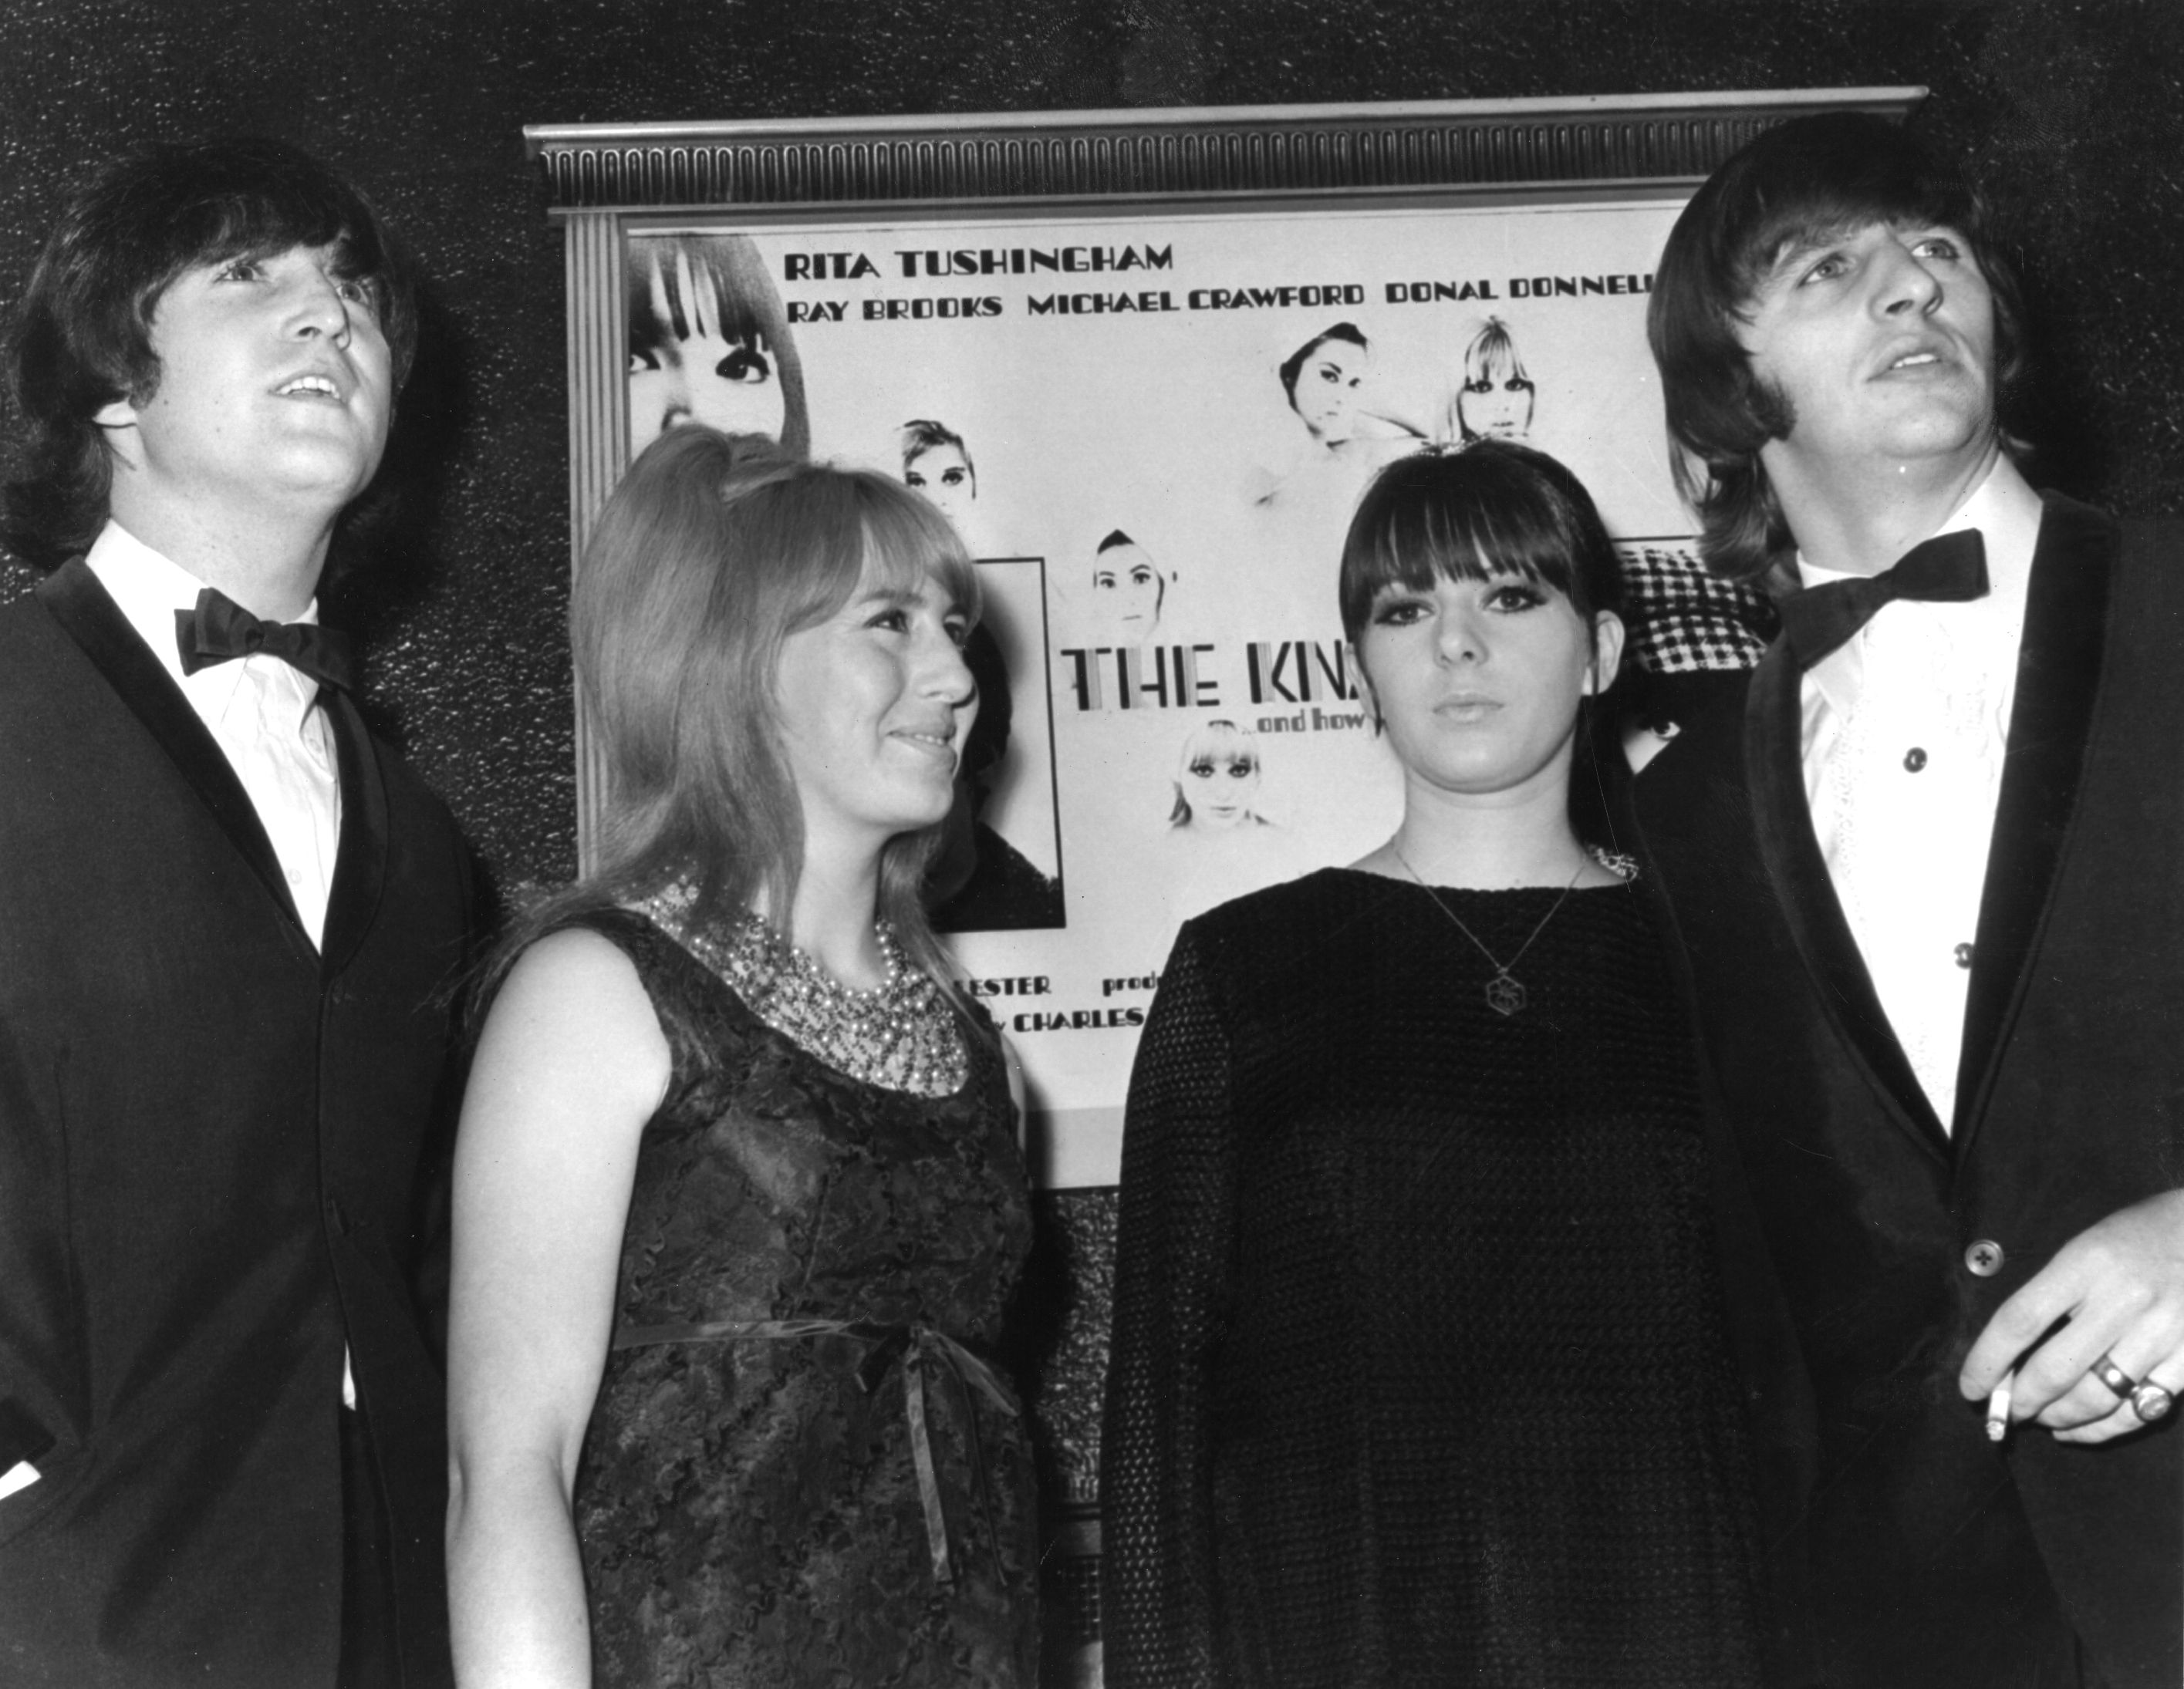 John Lennon, Cynthia Lennon, Maureen Starkey Tigrett, and Ringo Starr in front of a poster